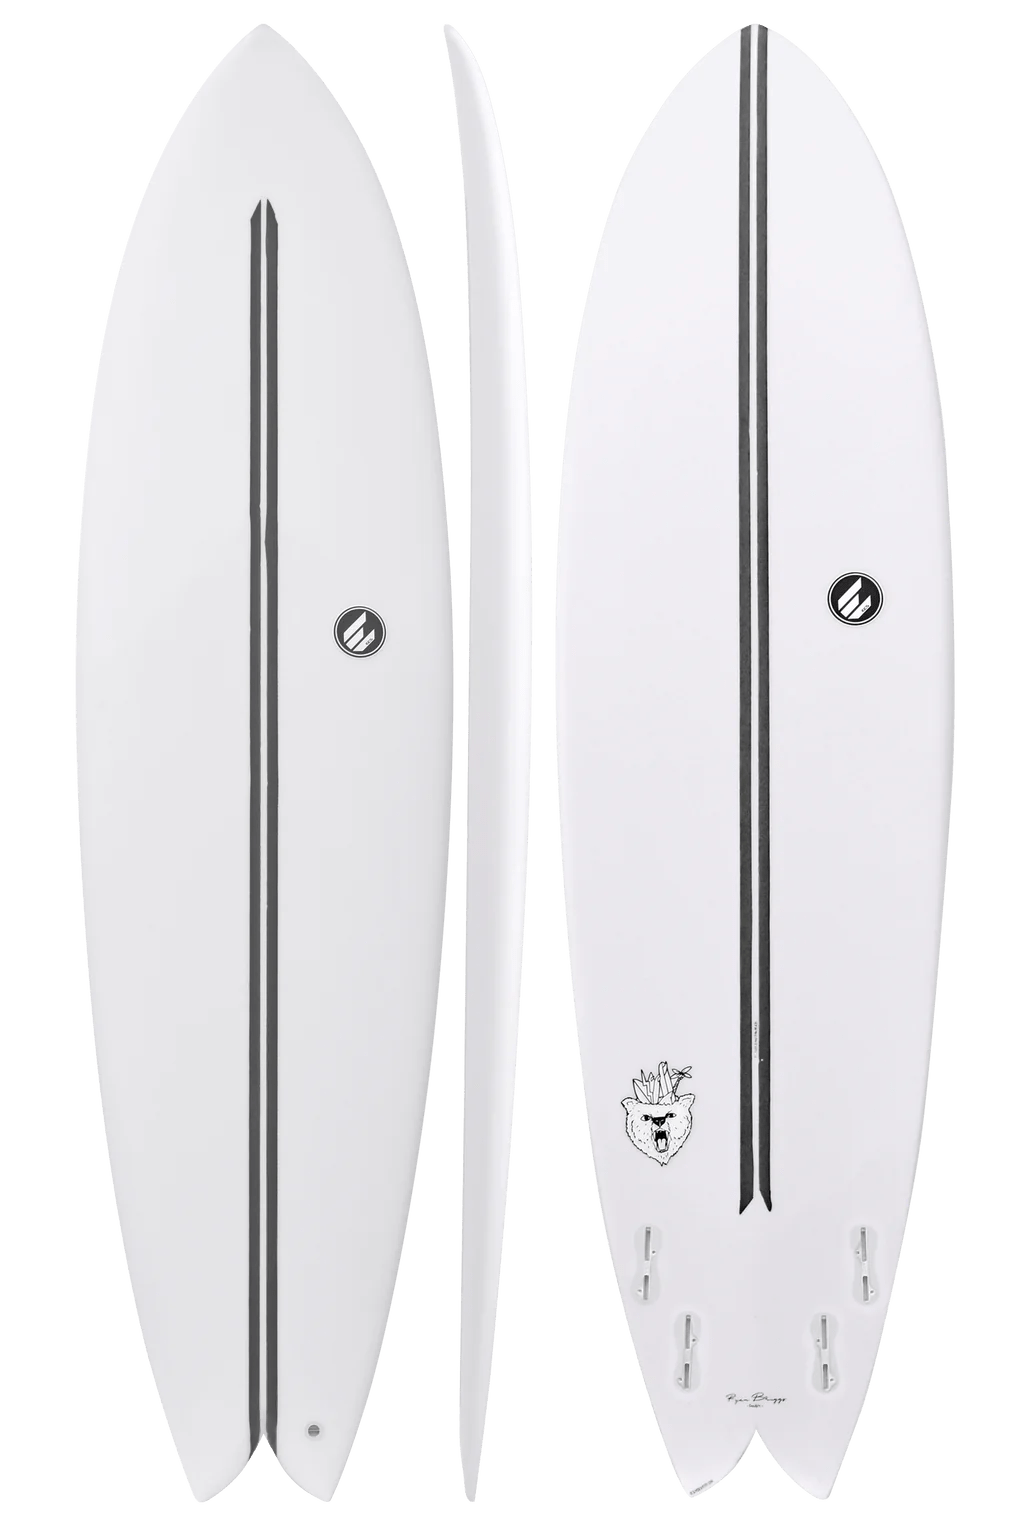 ECS 7'6 Bears Surfboard (White) - KS Boardriders Surf Shop